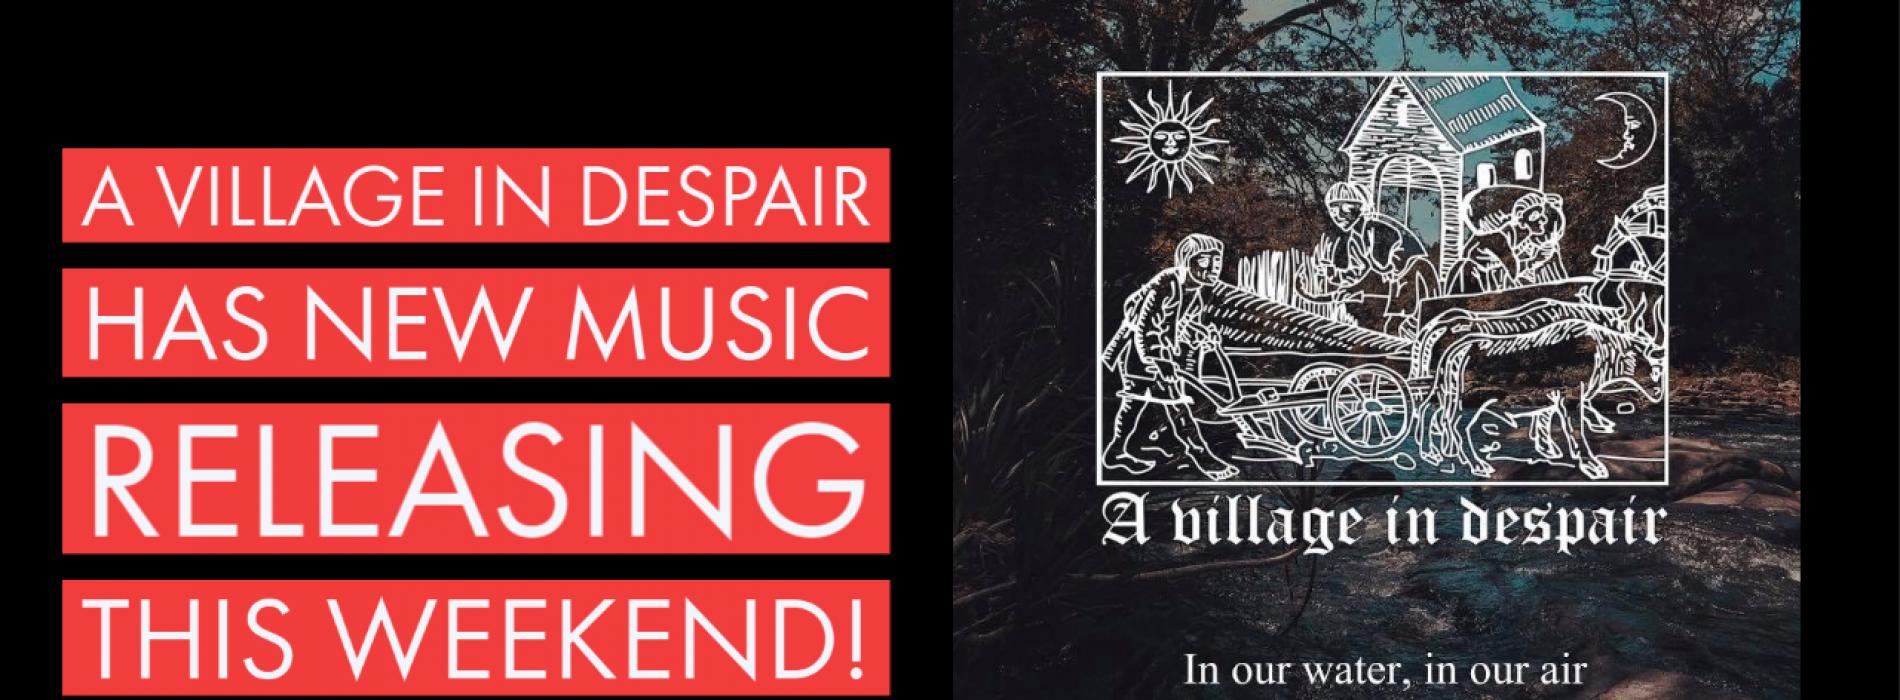 A Village In Despair Has New Music Releasing This Weekend!